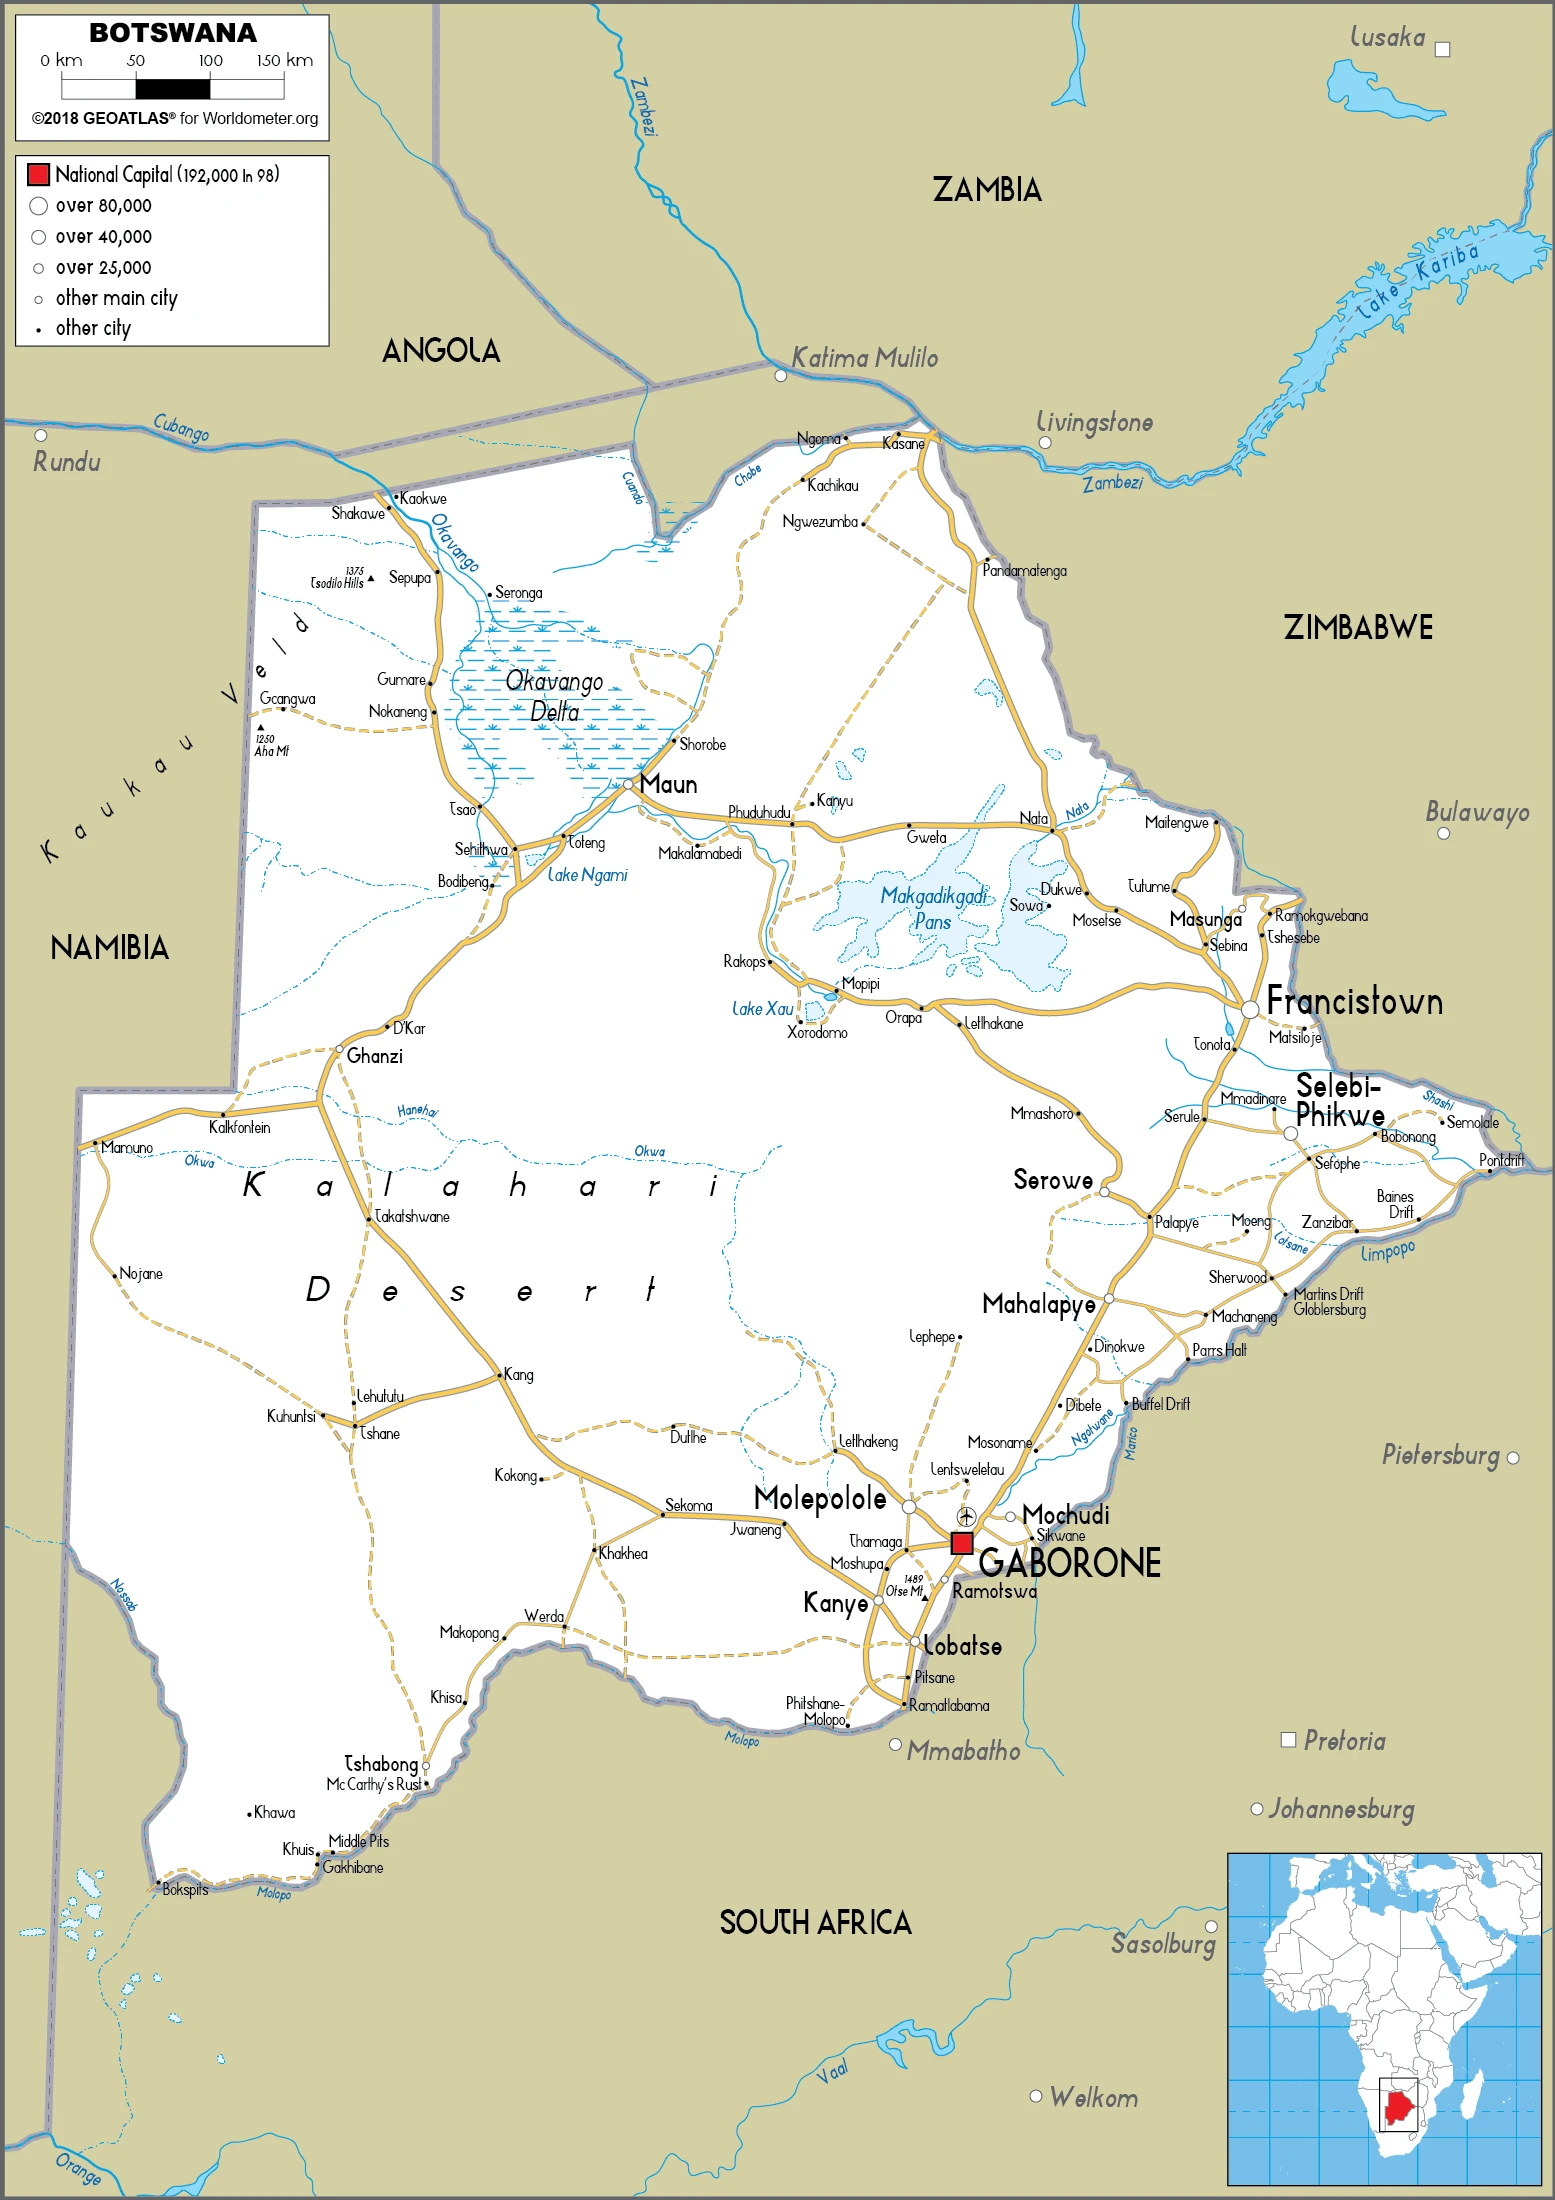 The route plan of the Motswana (singular), Batswana (plural) roadways.